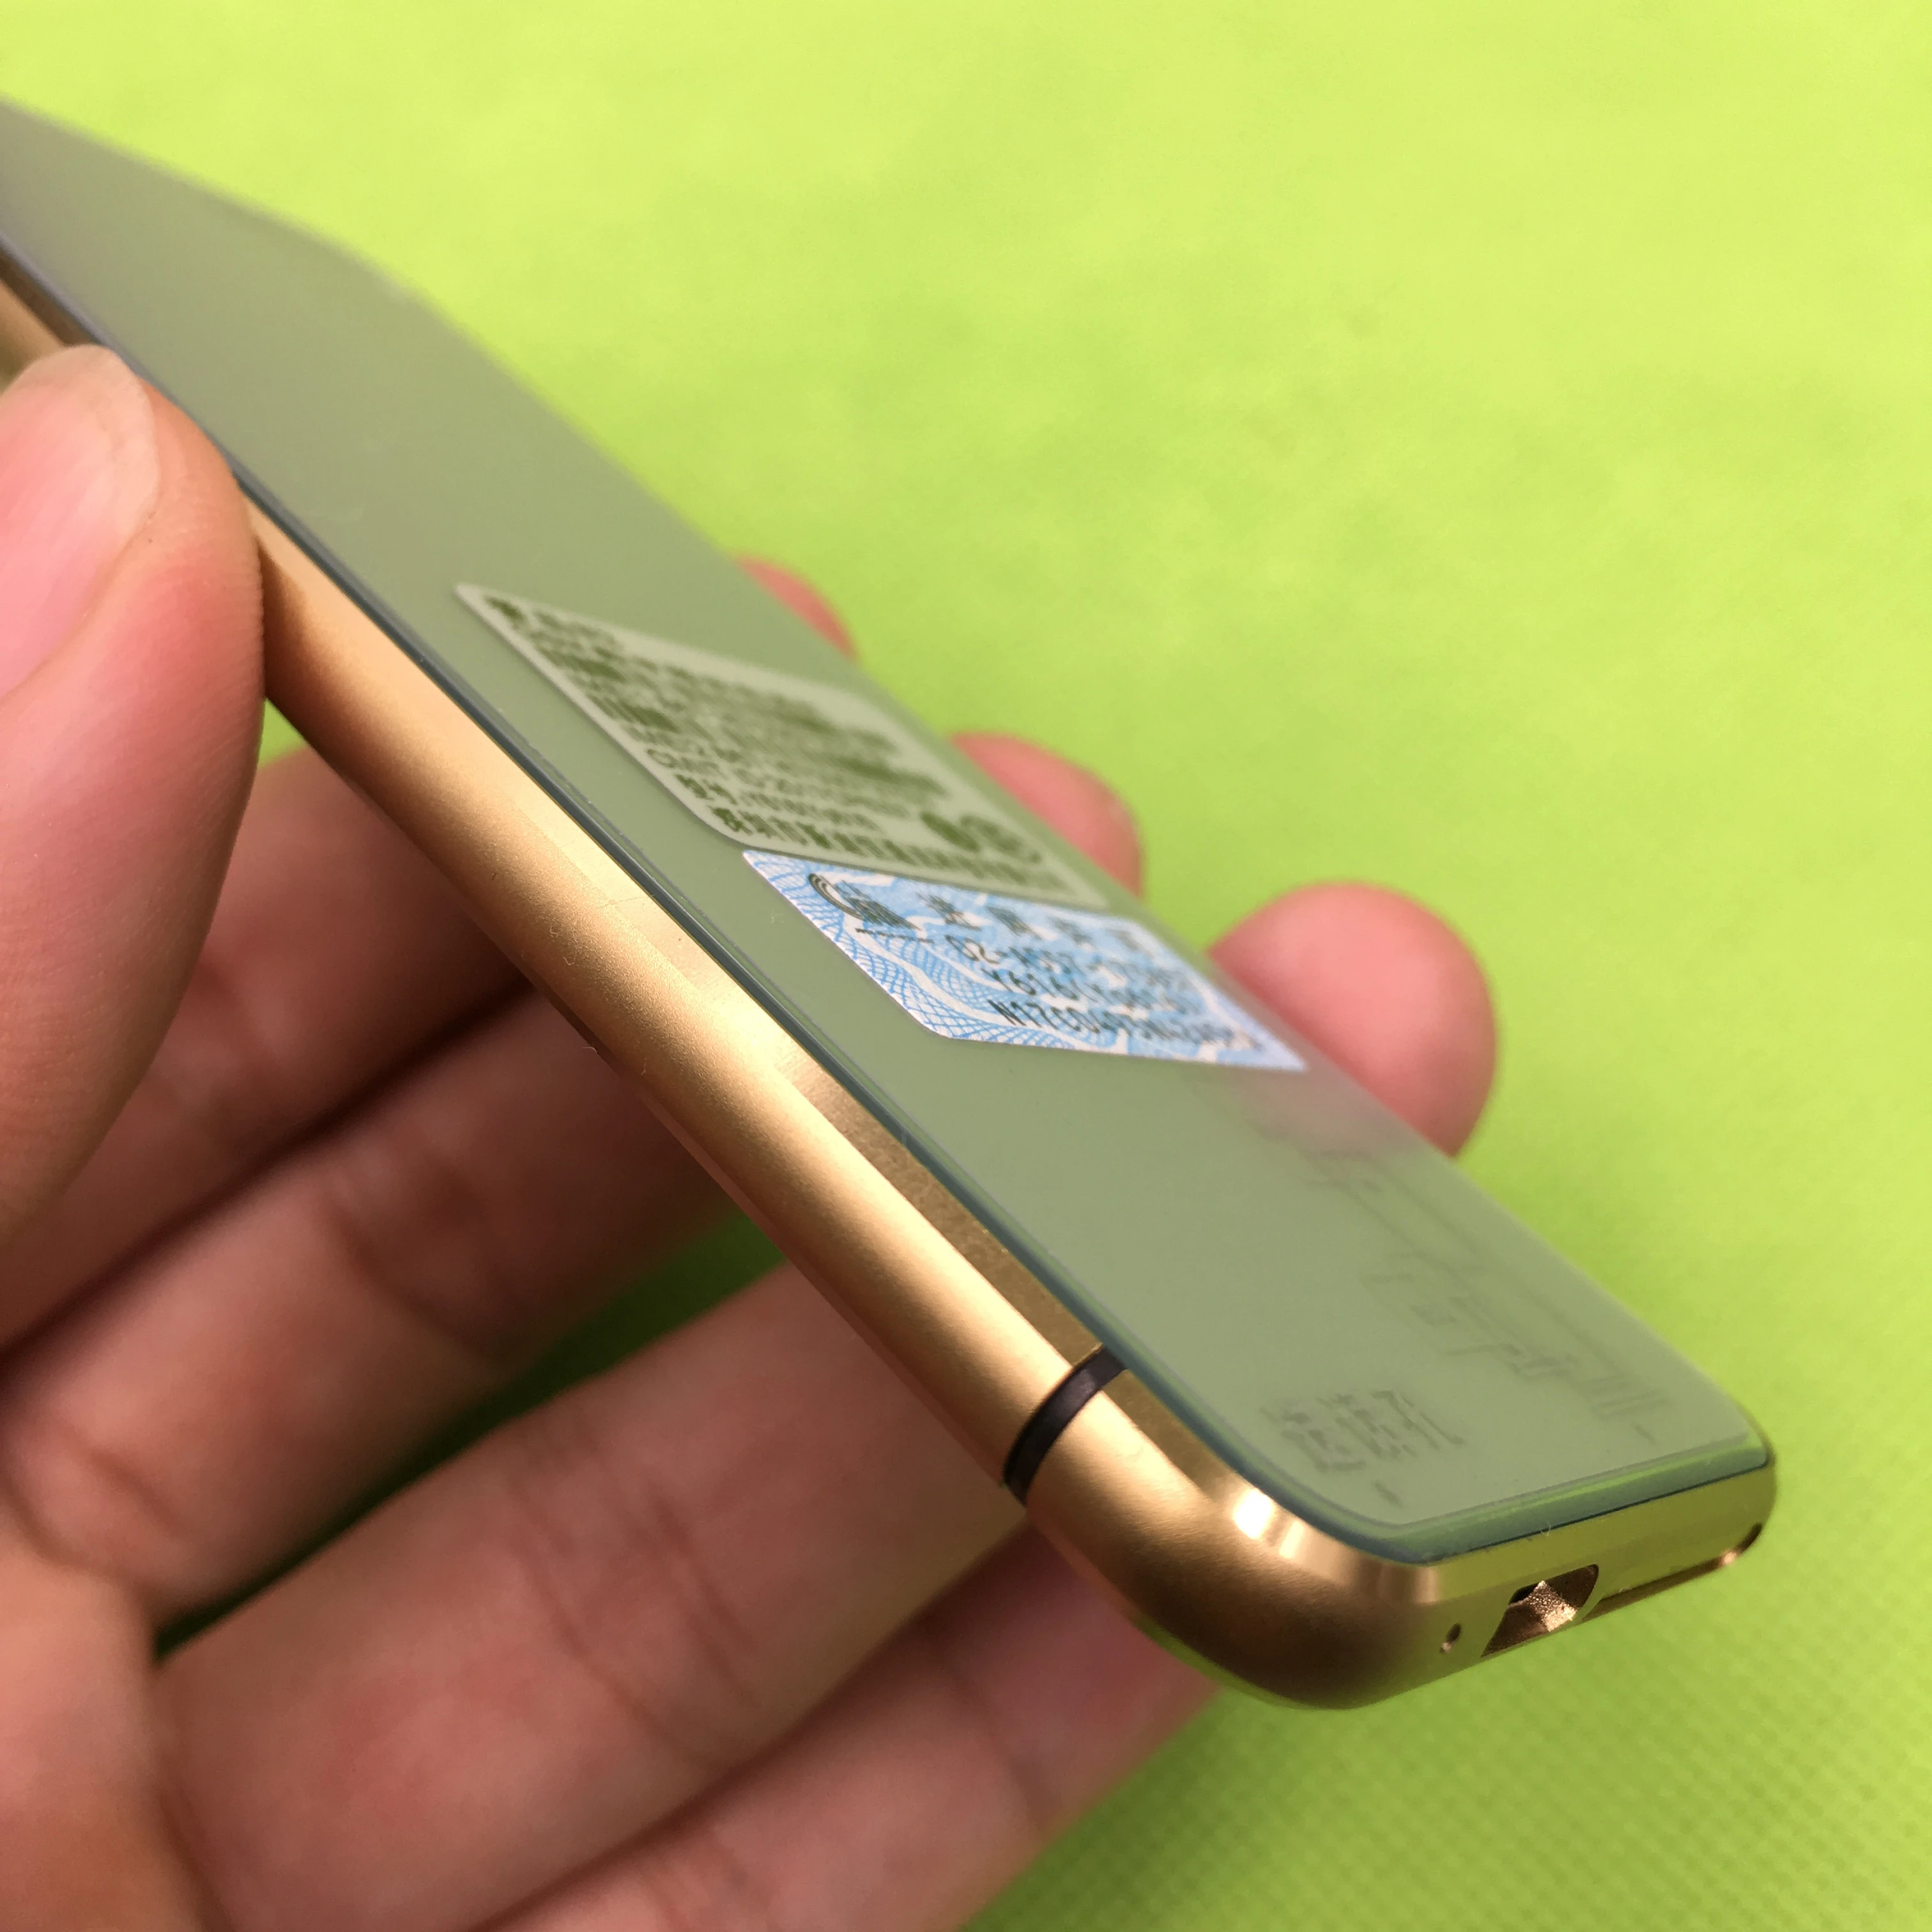 Mini Mobile Phone Slim ULCOOL V66 Card Feature Mobile Phone 1.54 inch Anti-lost GSM Dual SIM Feature Phone